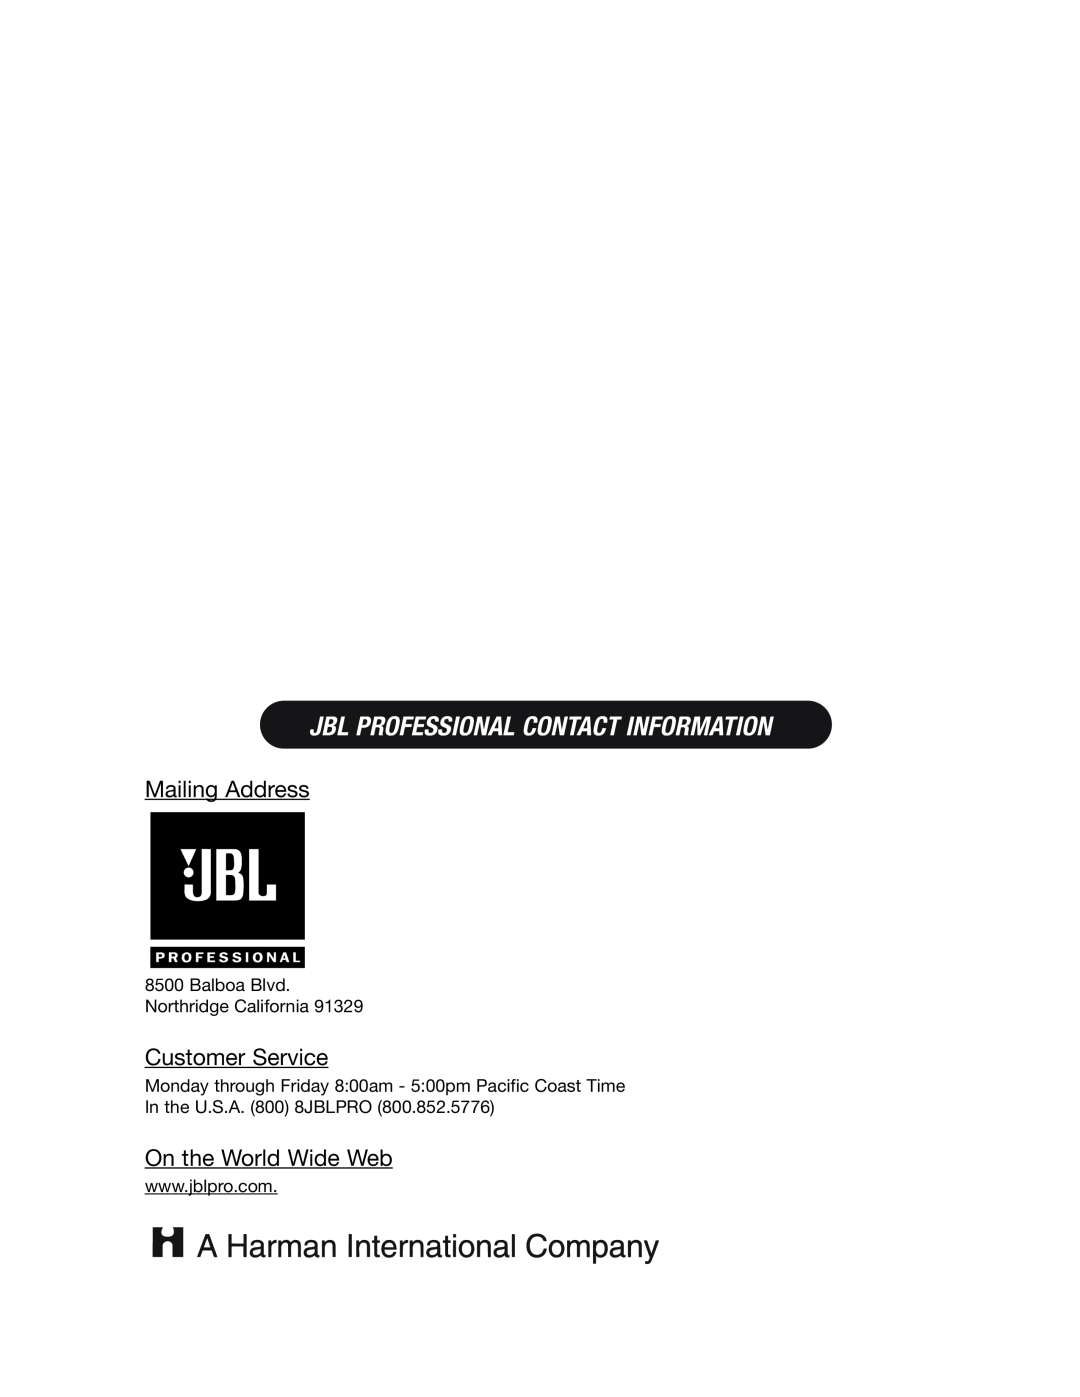 JBL EON PowerSub G2 manual Jbl Professional Contact Information, Mailing Address, Customer Service, On the World Wide Web 